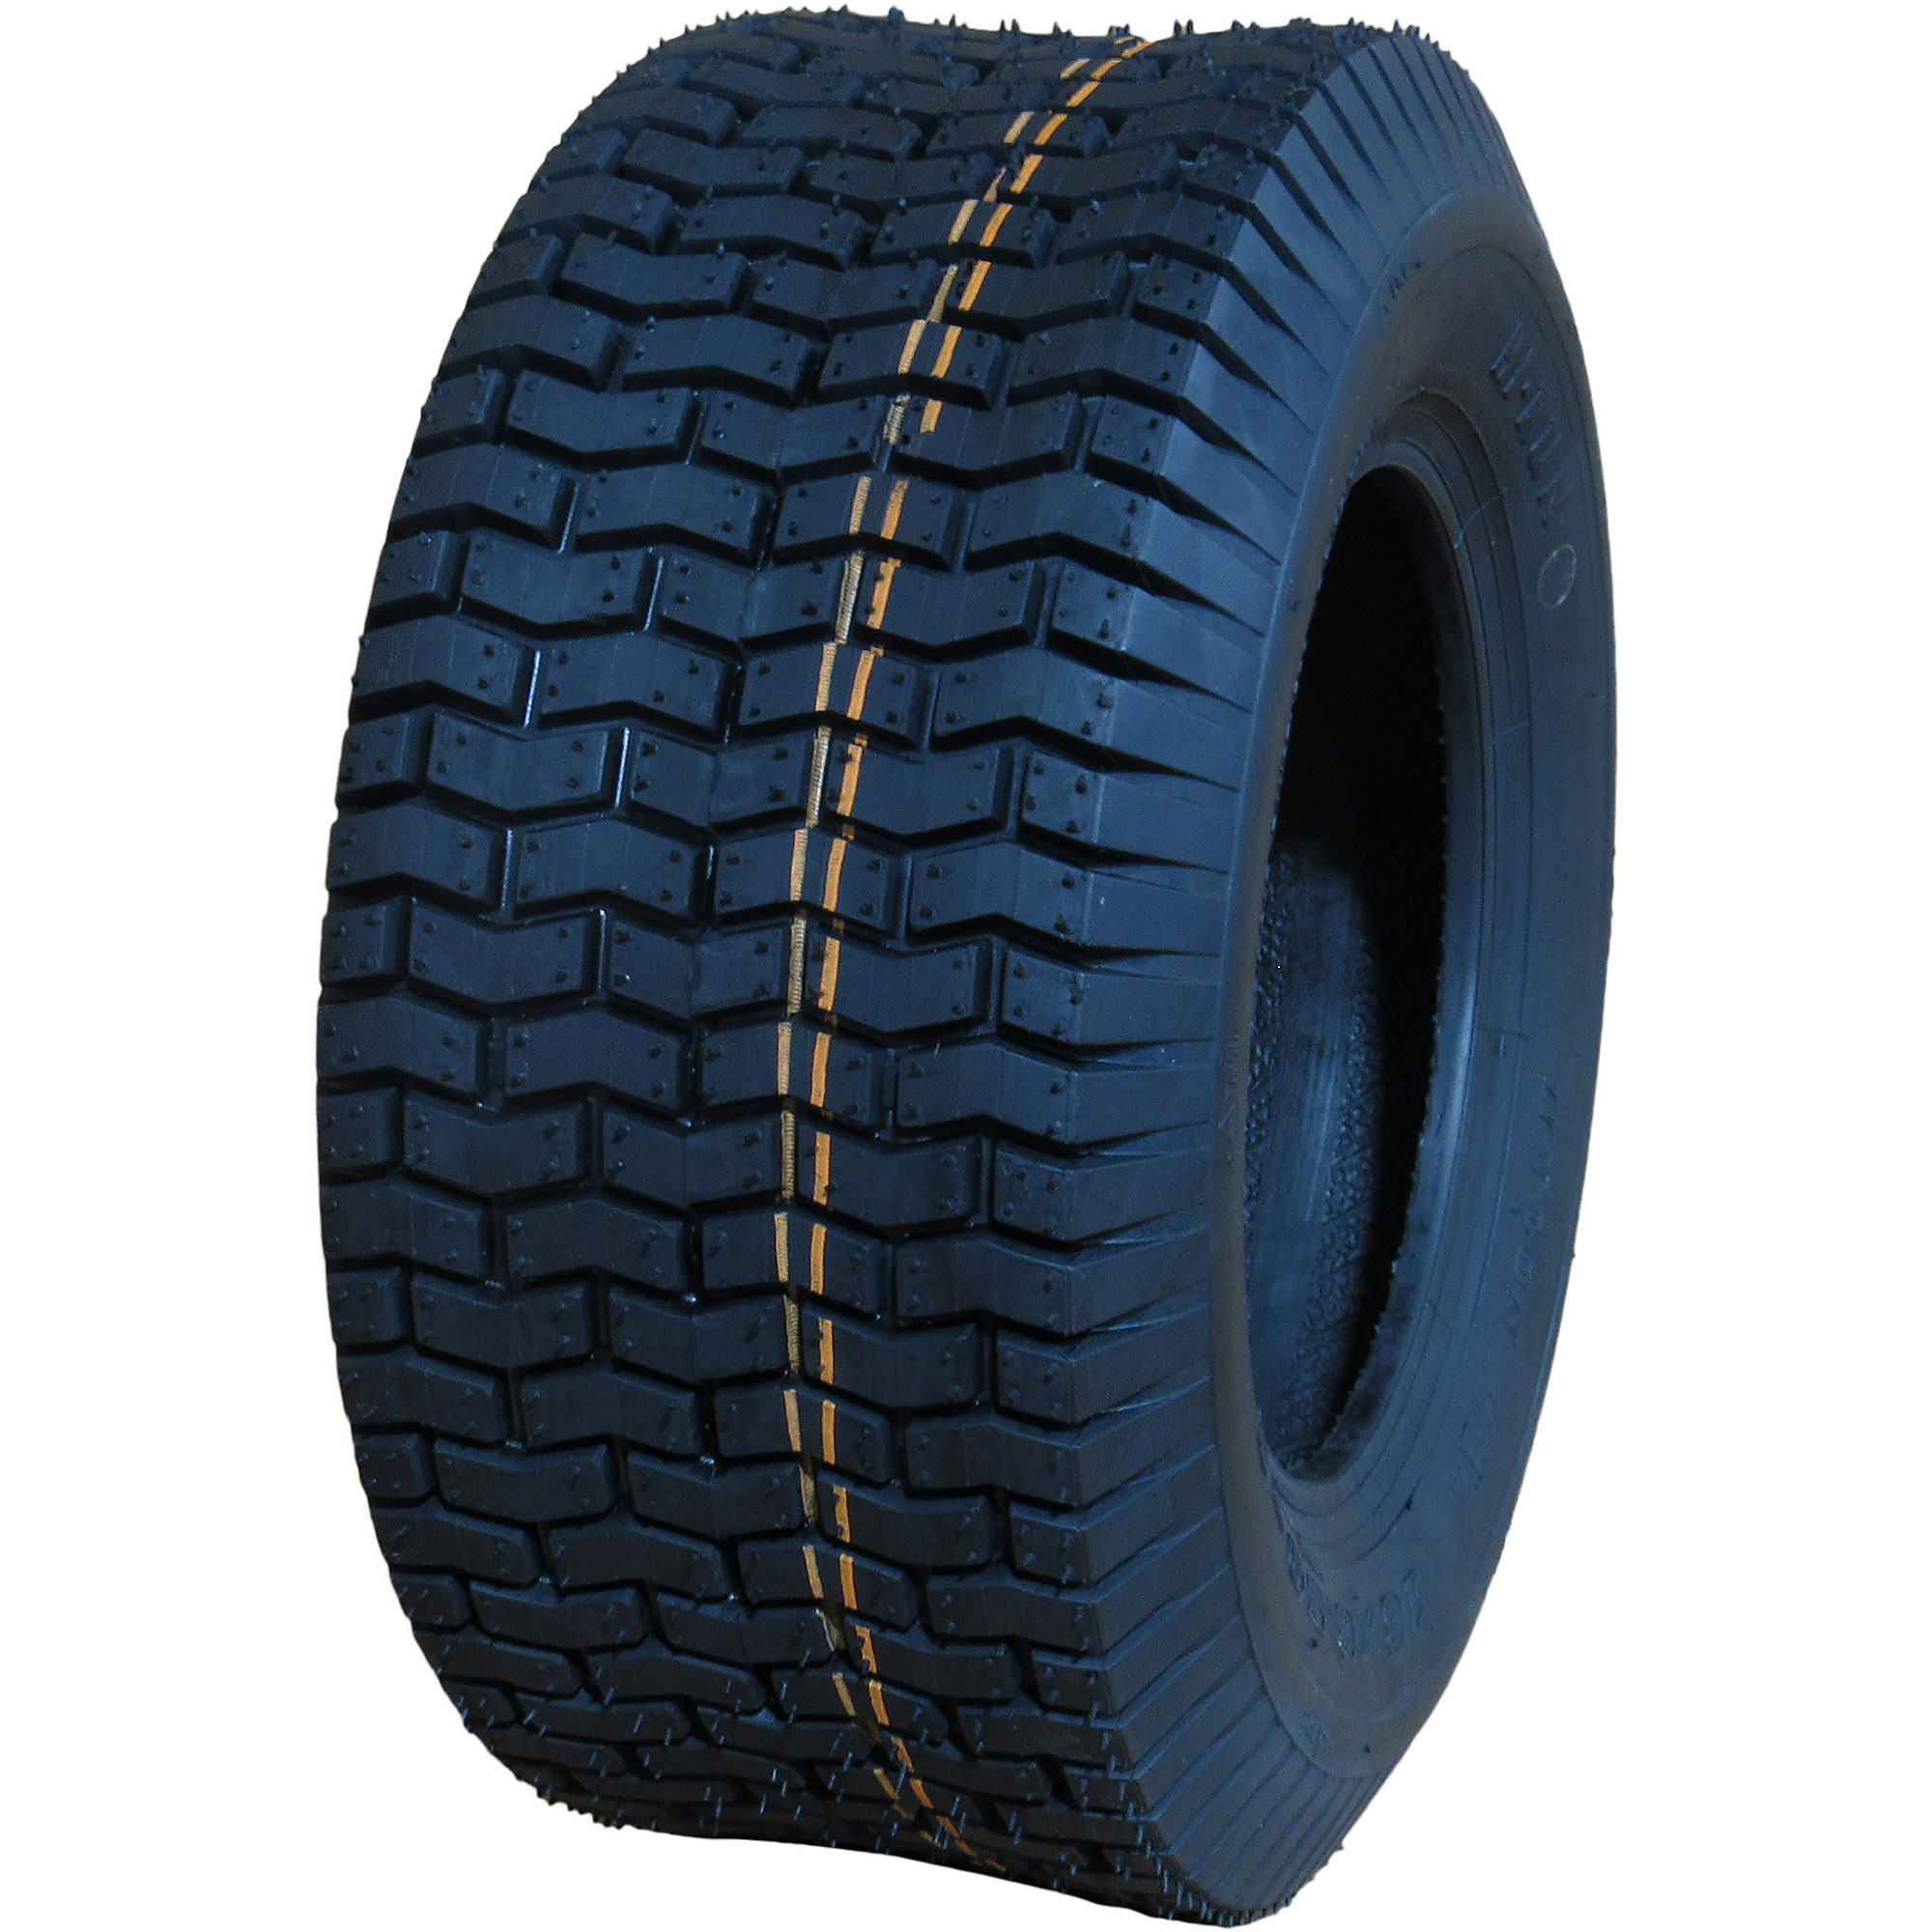 HI-RUN, Lawn Garden Tire, SU12 Turf II, Tire Size 16X6.50-8 Load Range Rating B, Model WD1197